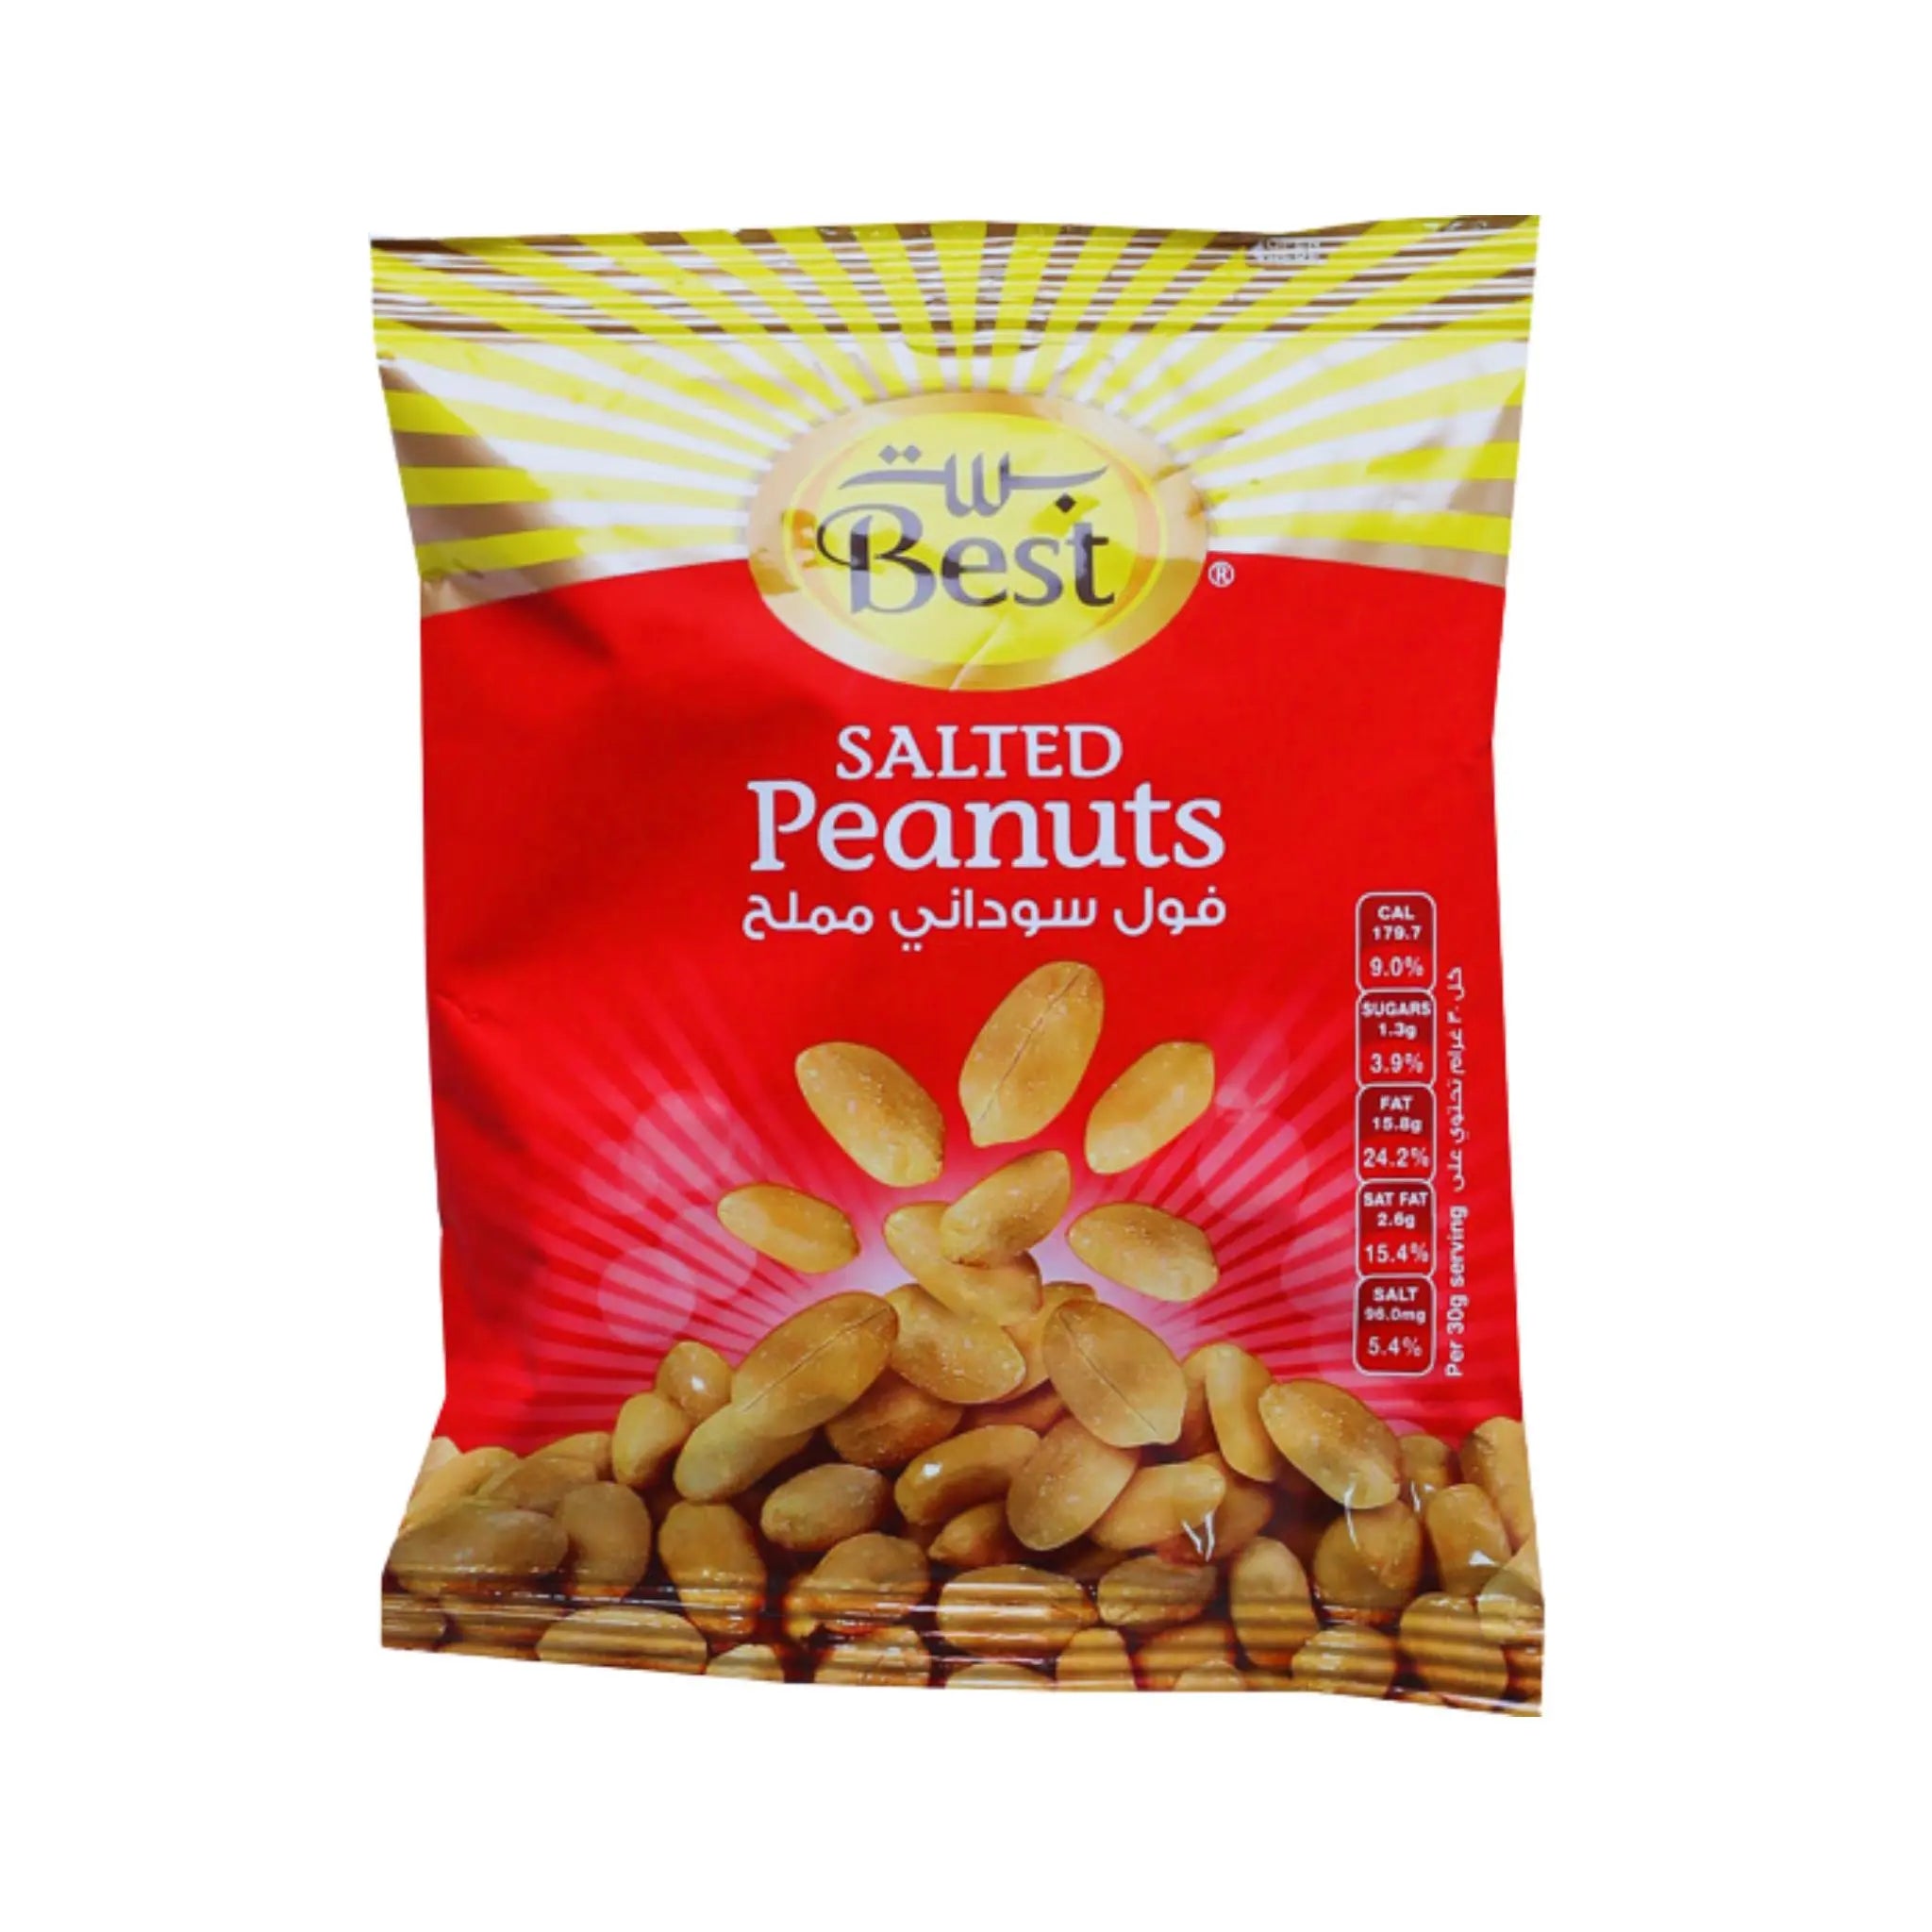 Best Salted Peanuts - 6x12x30g (1 carton) - Marino.AE